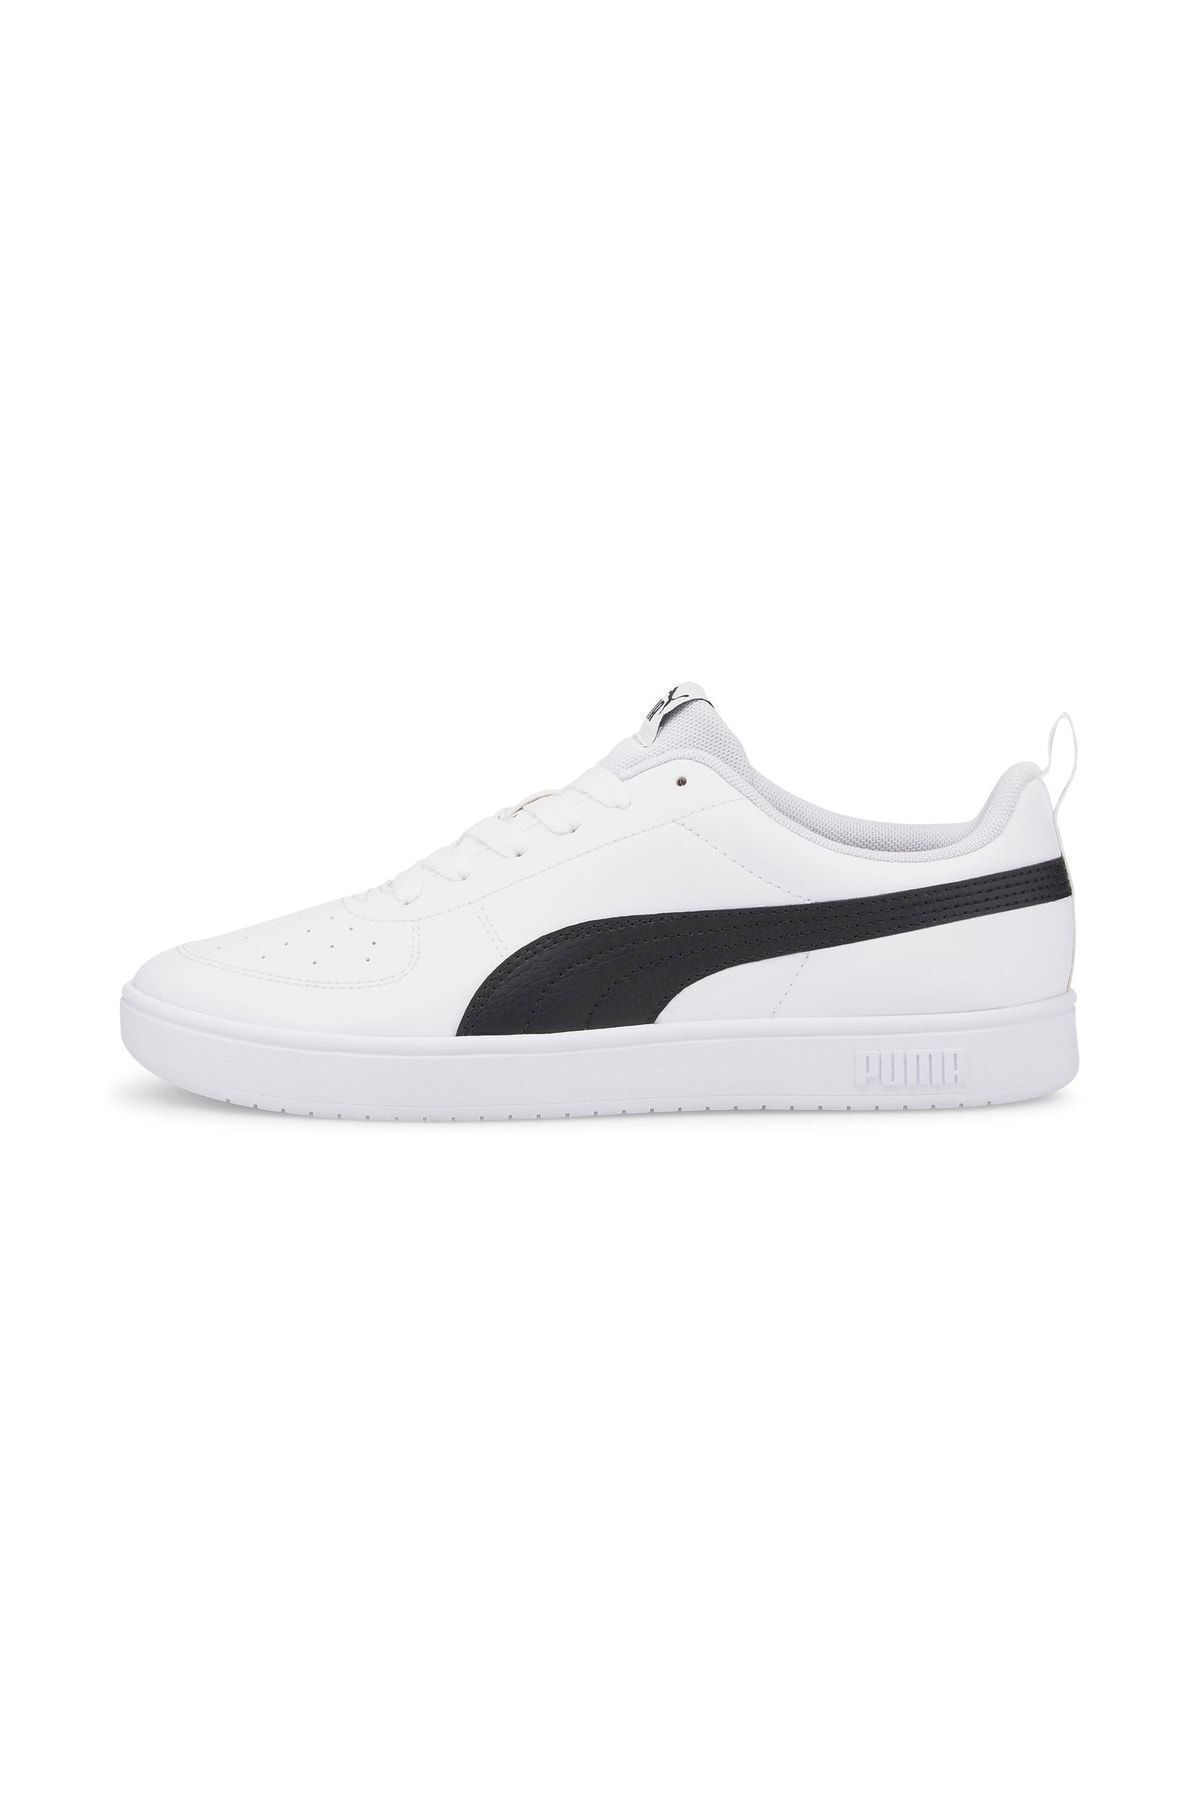 Puma Rickie Beyaz Siyah Erkek Spor Ayakkabı 387607-02